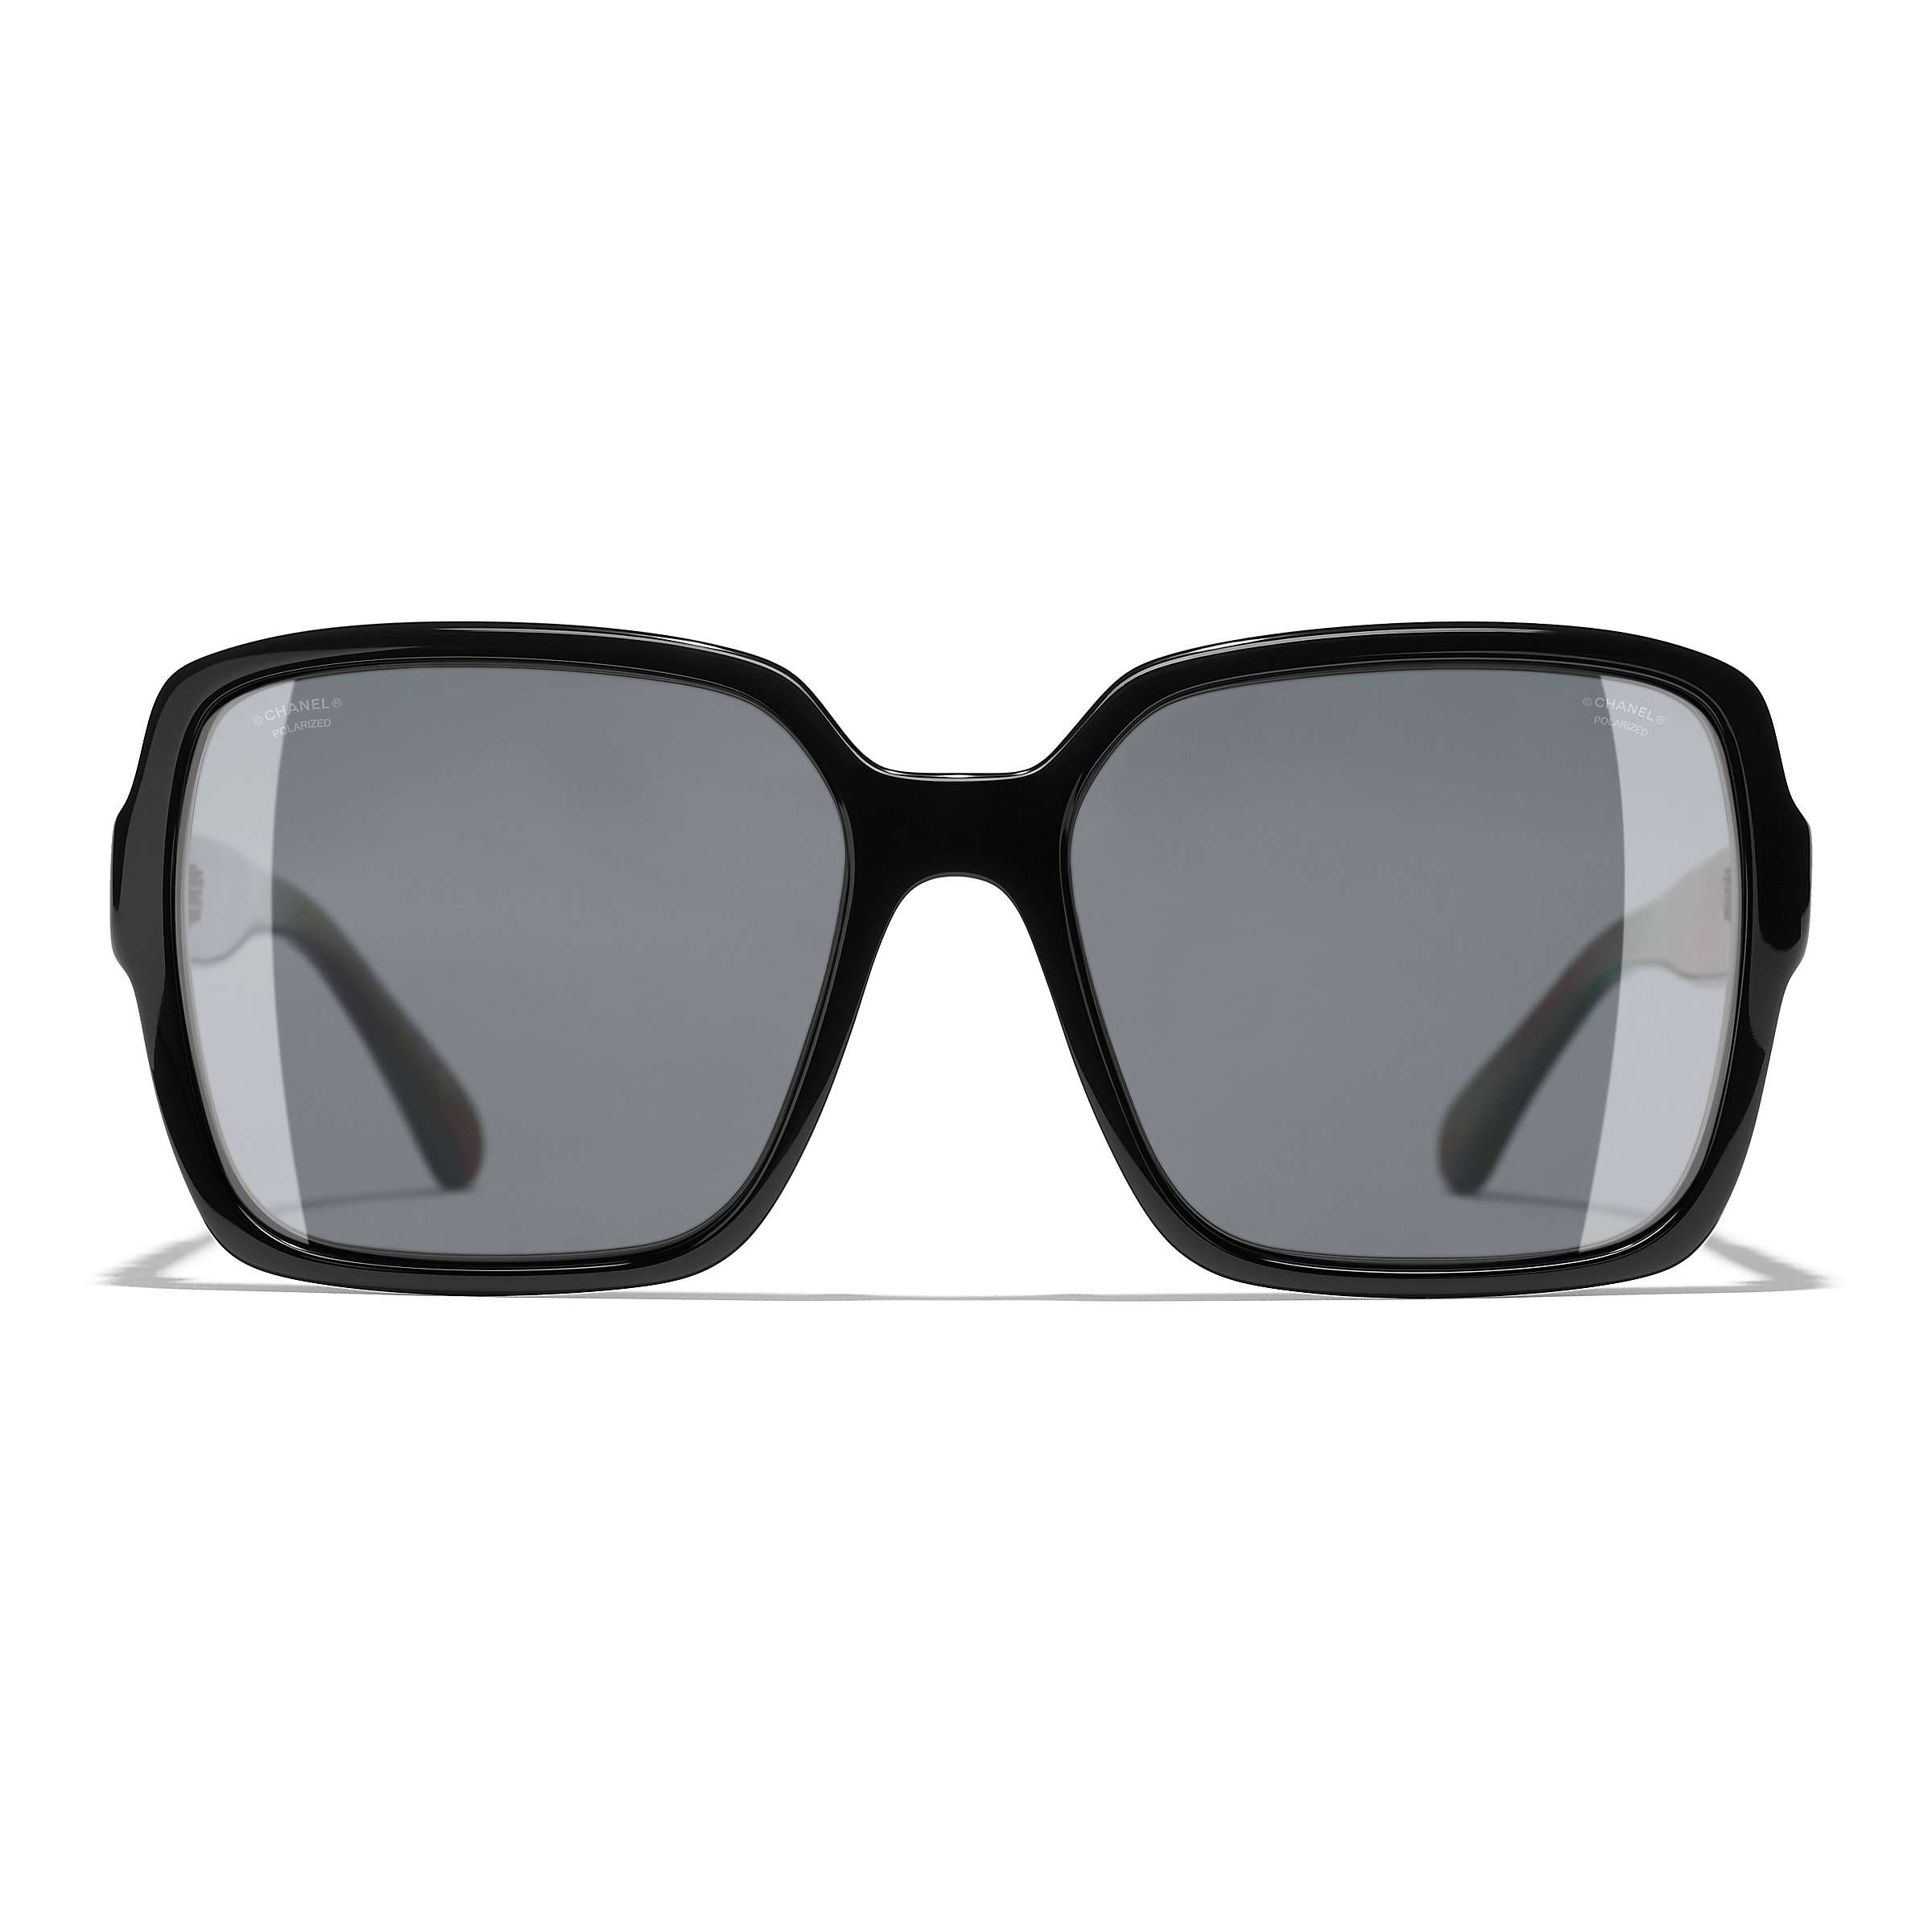 Buy CHANEL Rectangular Sunglasses CH5408 Black/Grey Online at johnlewis.com